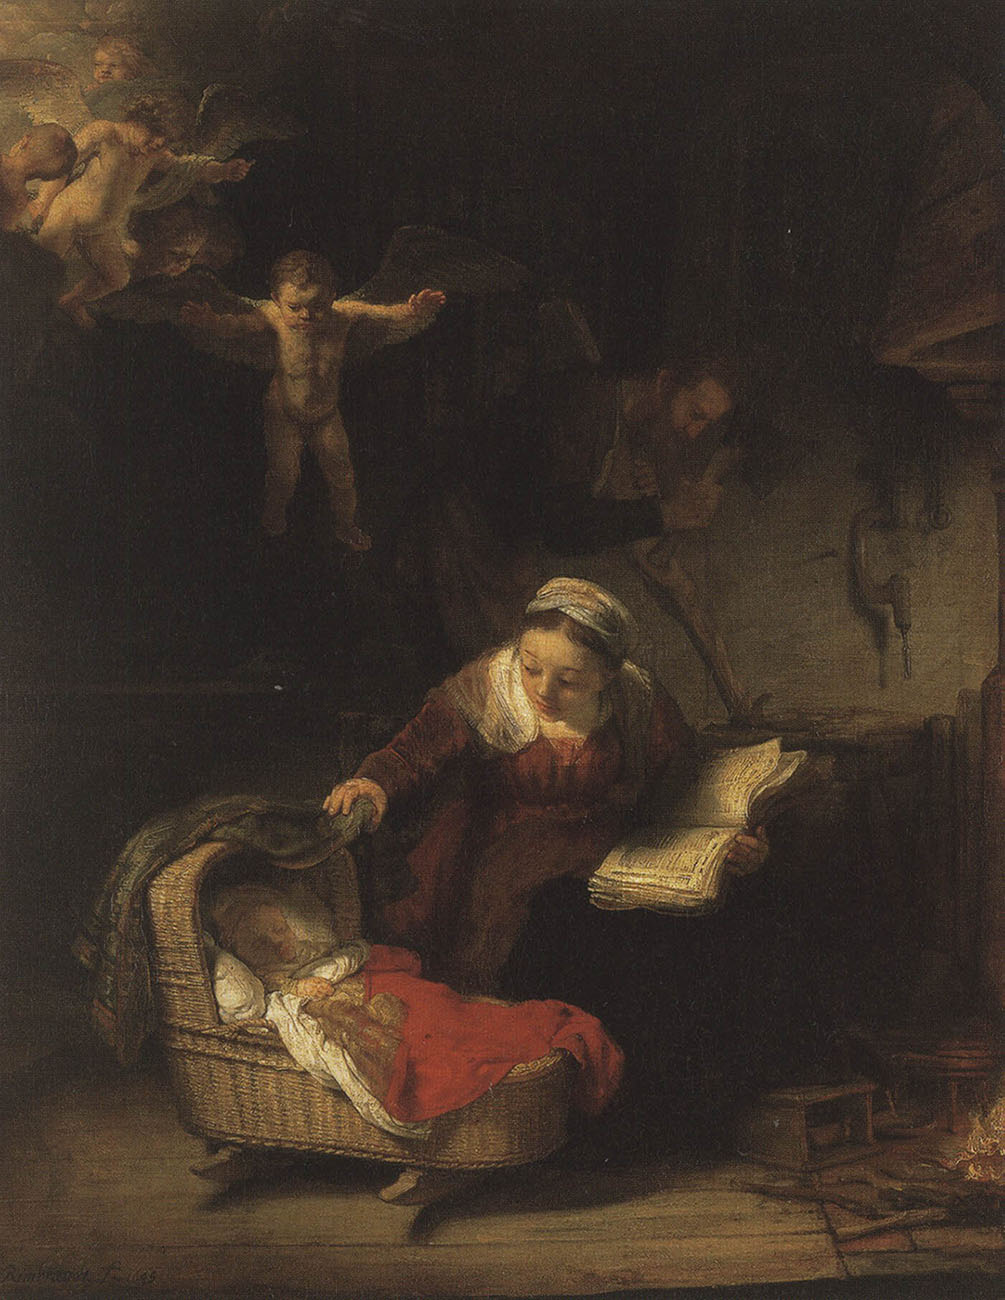 Рембрандт Харменс ван Рейн. "Святое семейство". 1645. Эрмитаж, Санкт-Петербург.